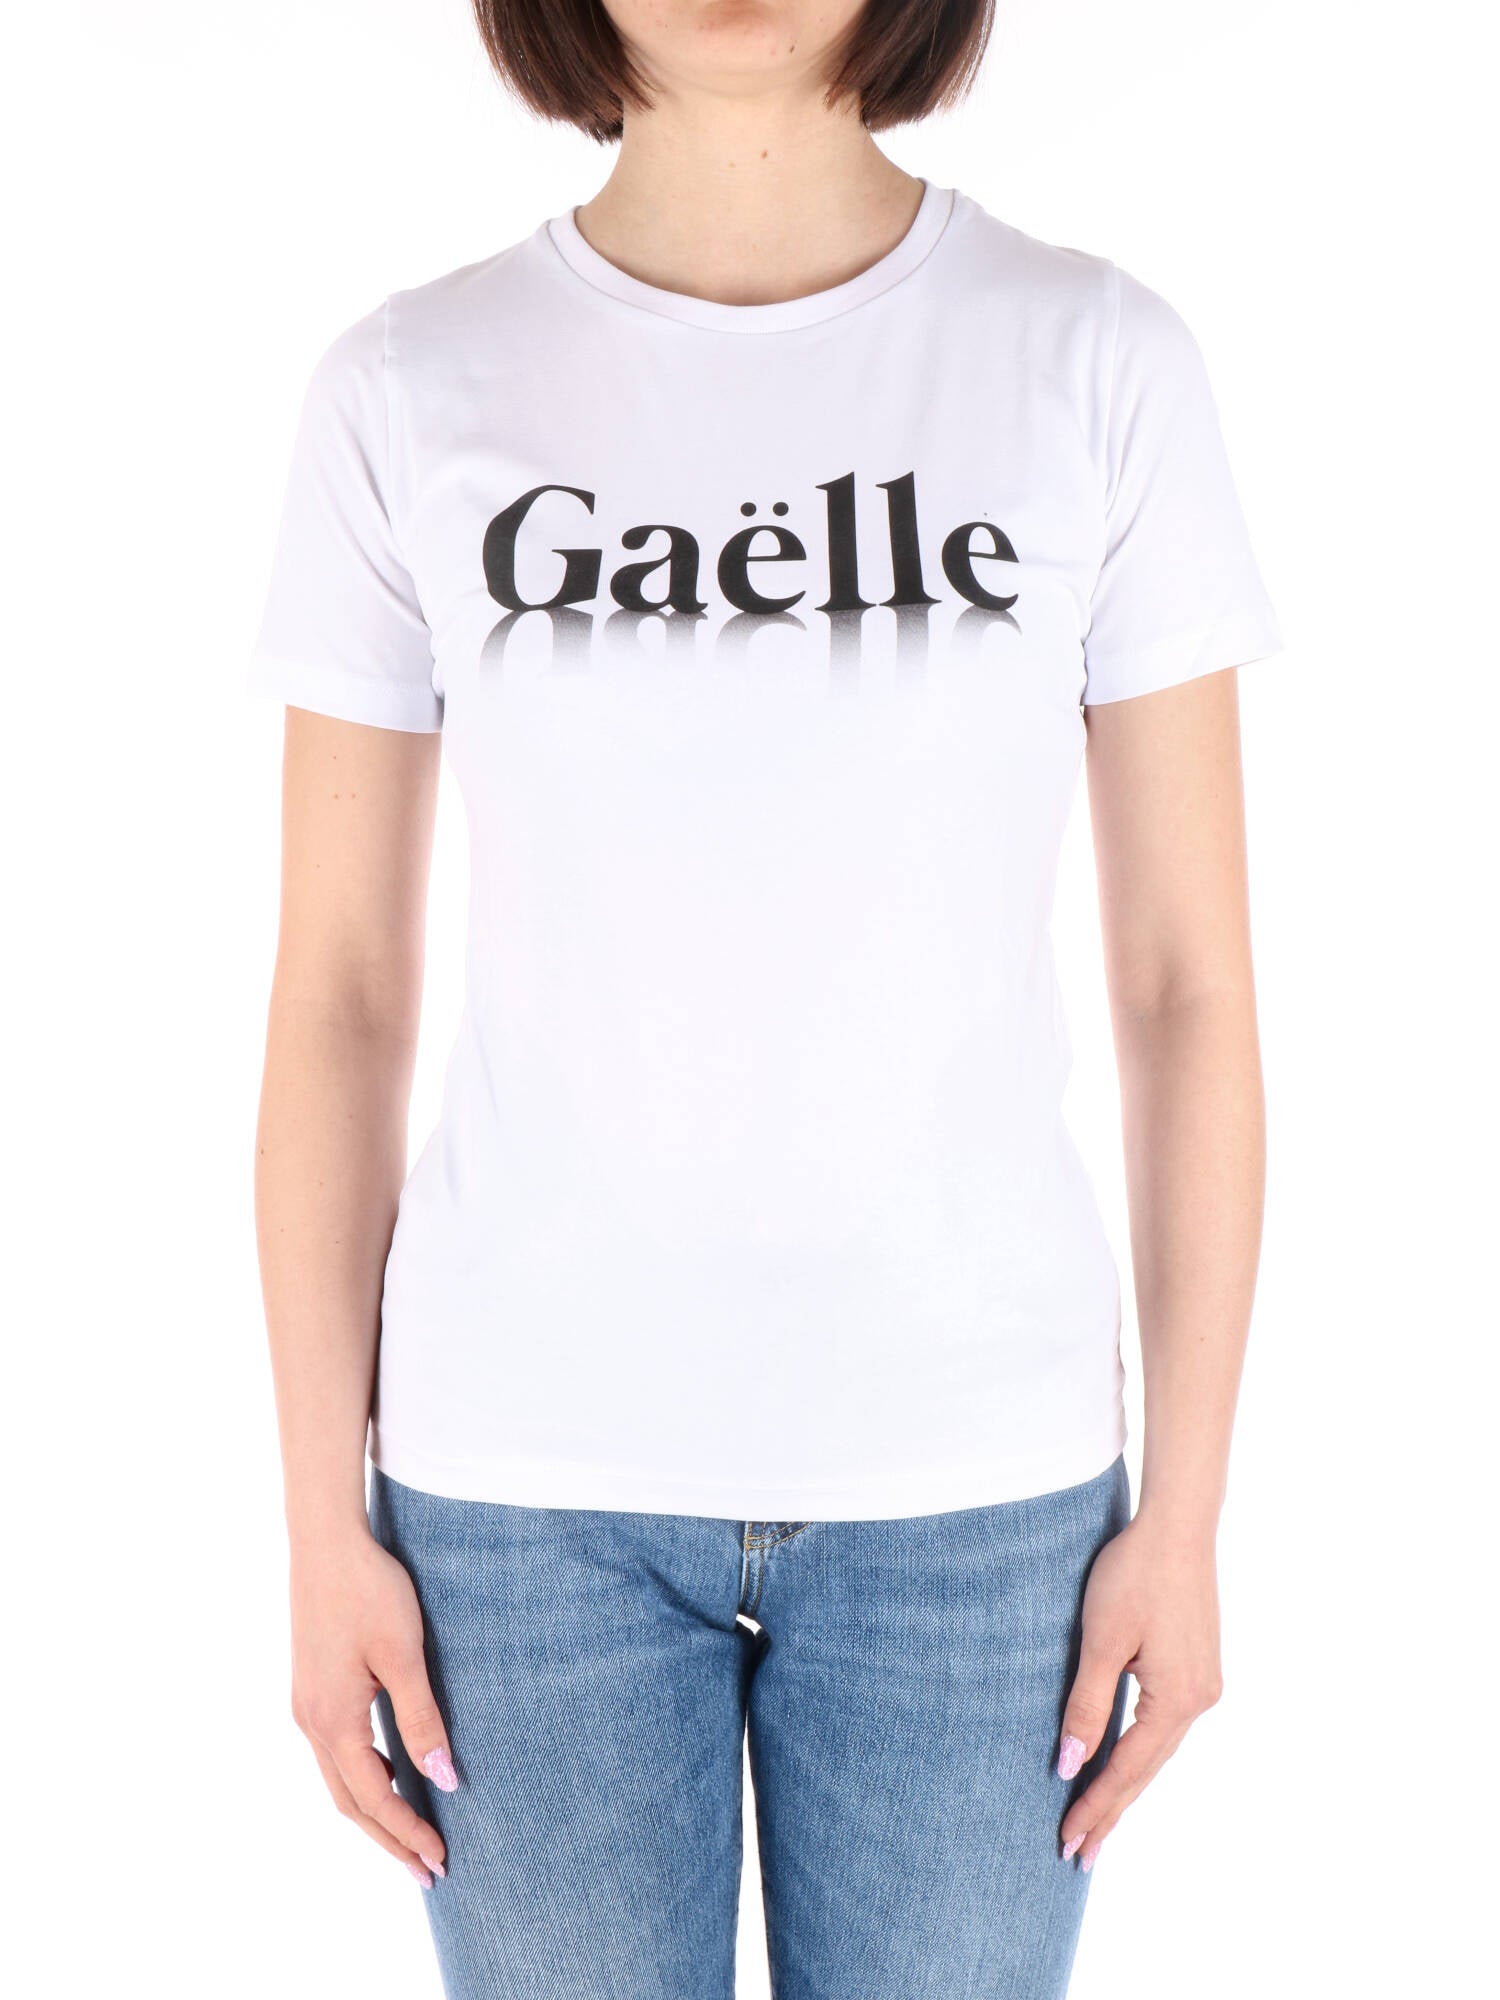 Gaelle Paris t-shirt bianca con stampa